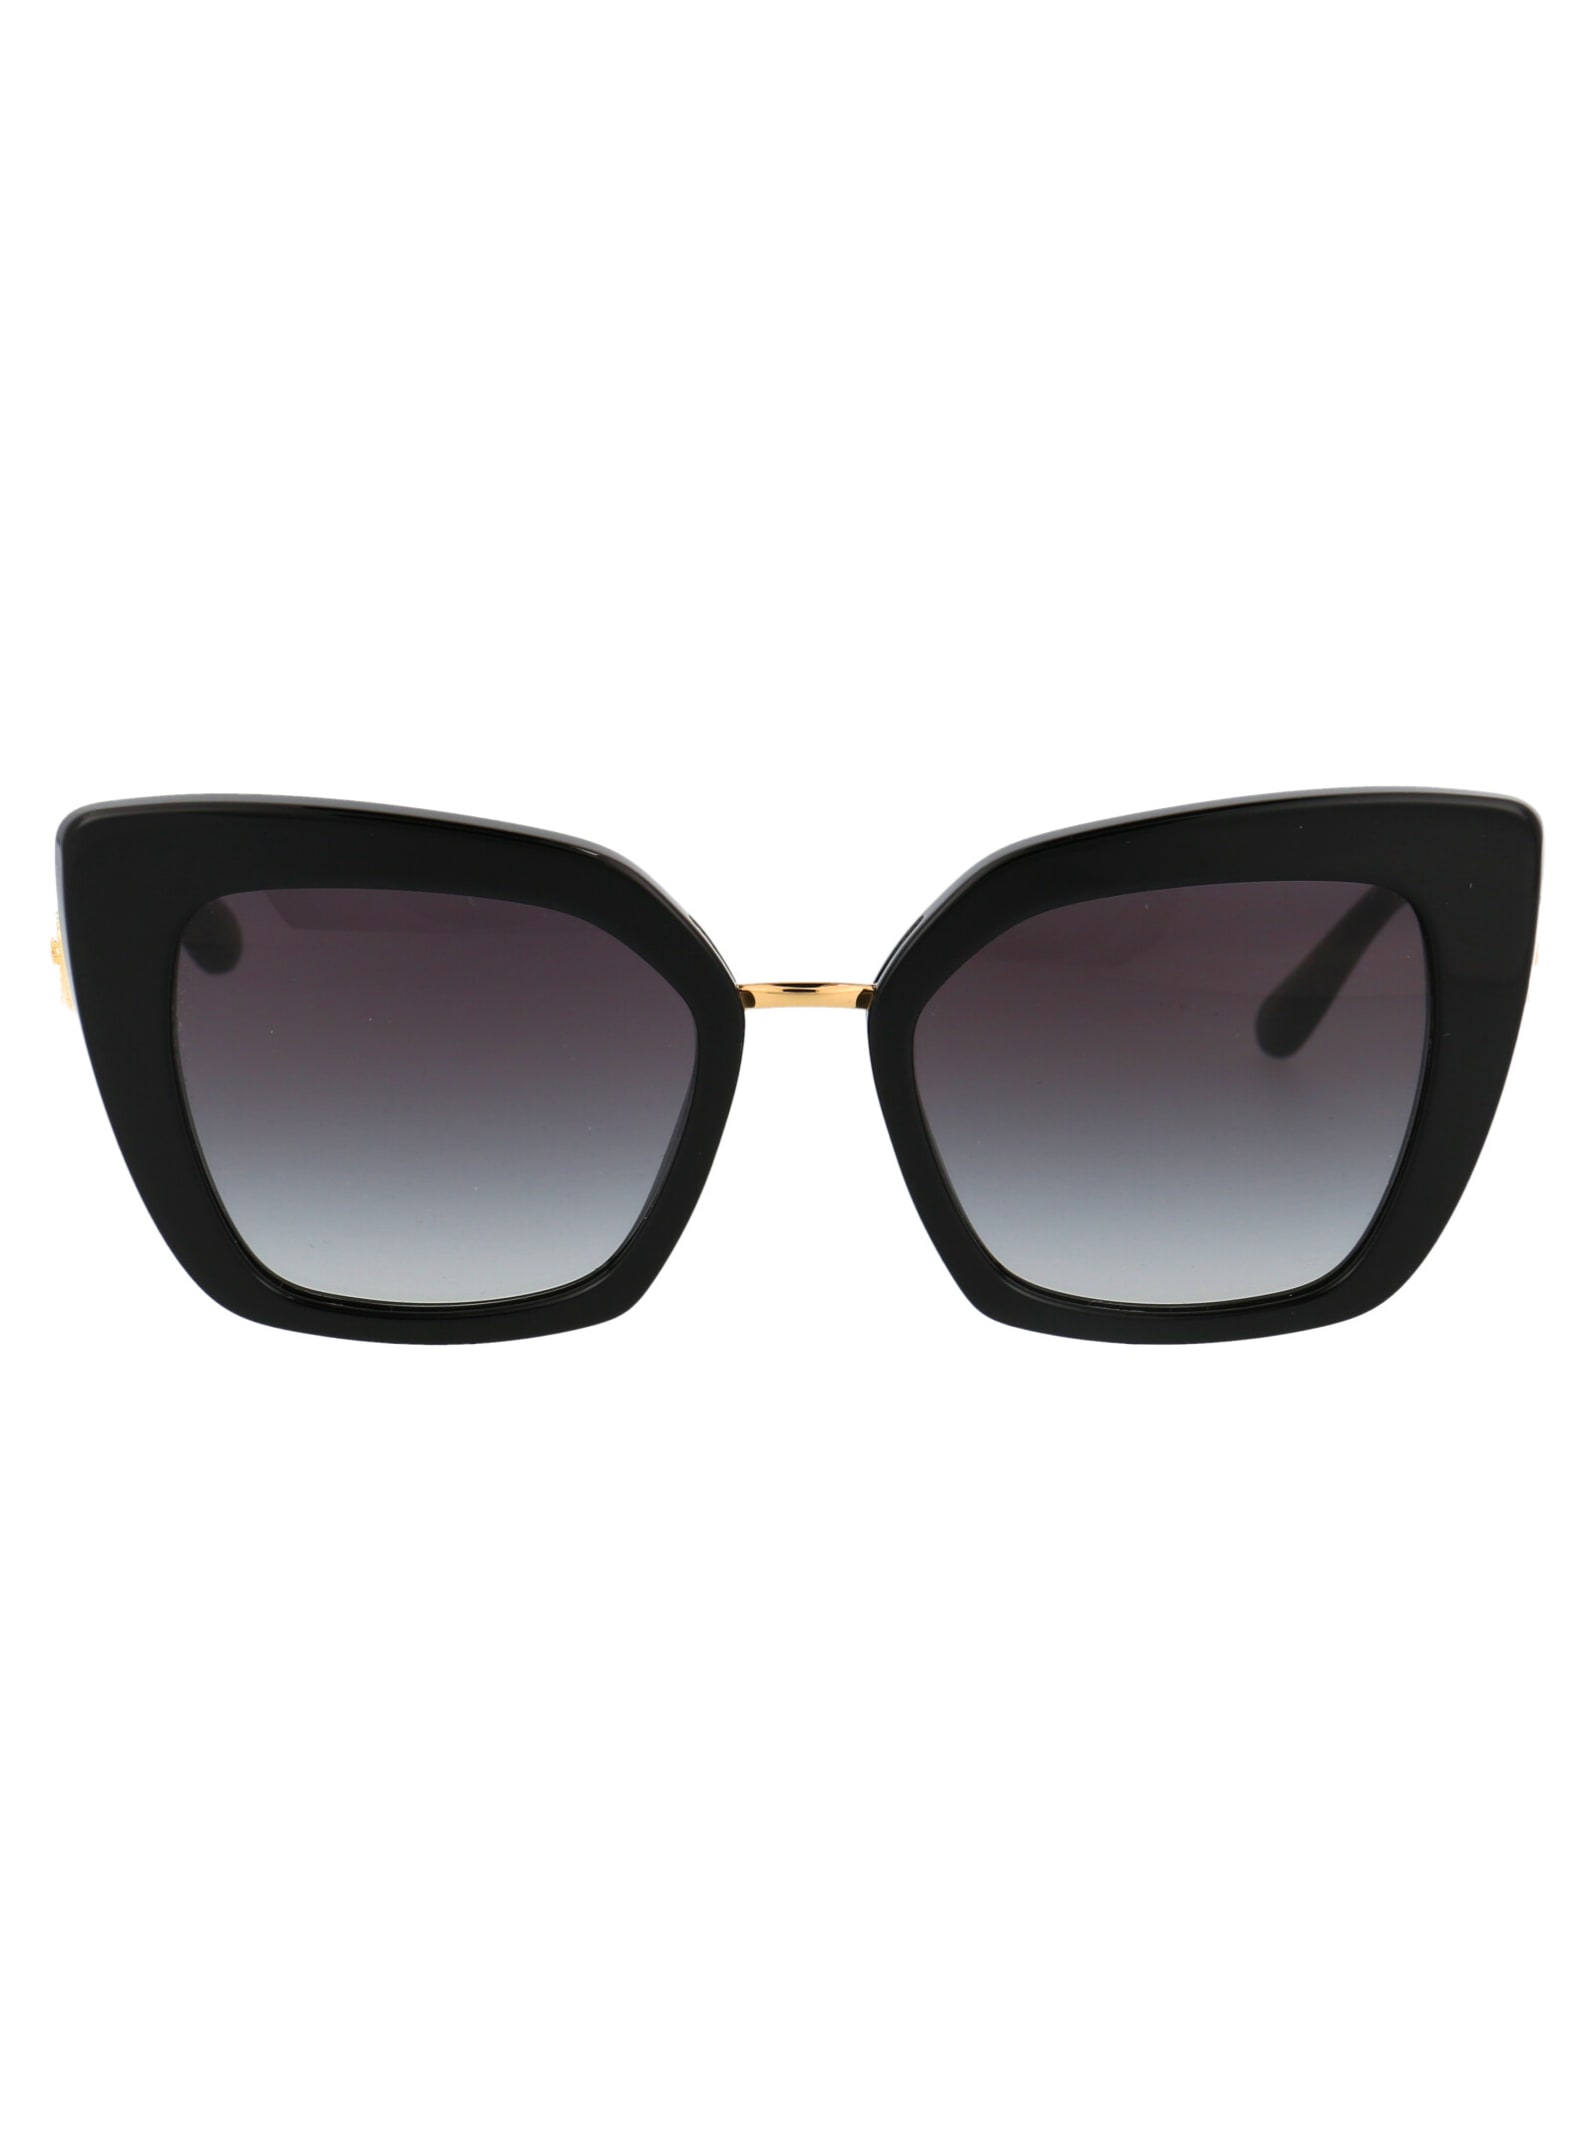 Dolce & Gabbana Eyewear 0dg4359 Sunglasses